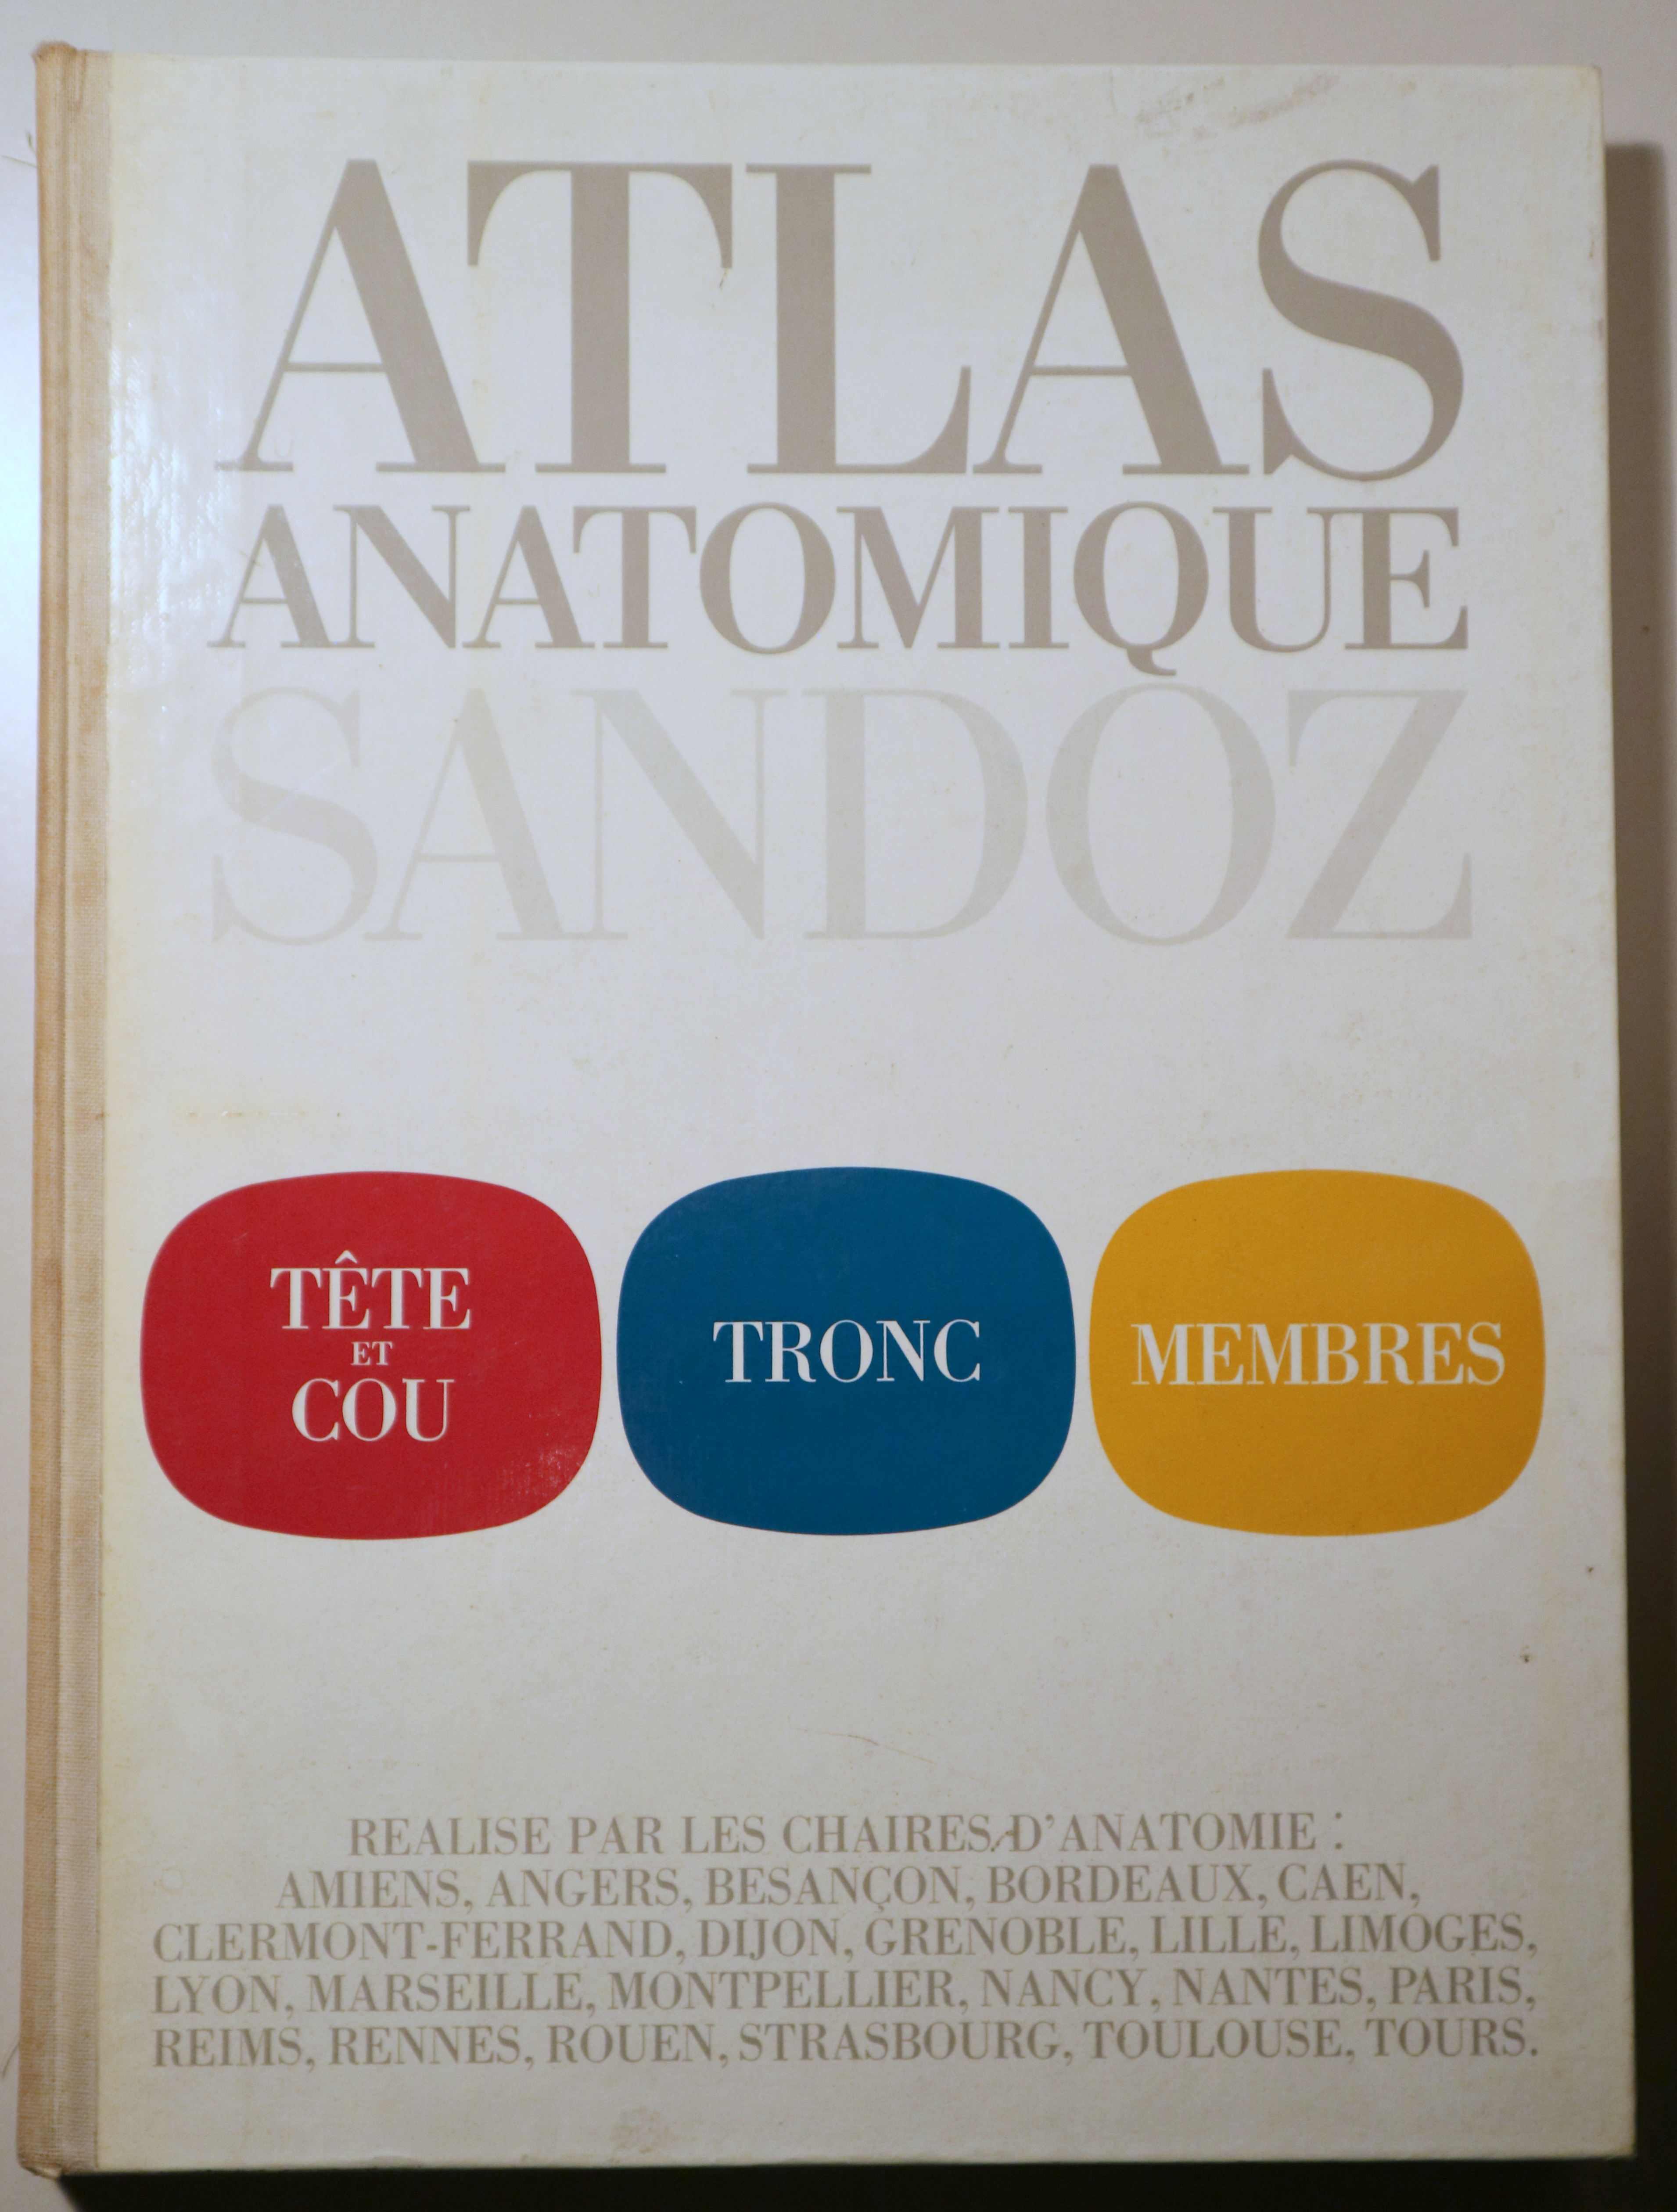 ATLAS ANATOMIQUE SANDOZ - Paris 1971 - Muy  ilustrado